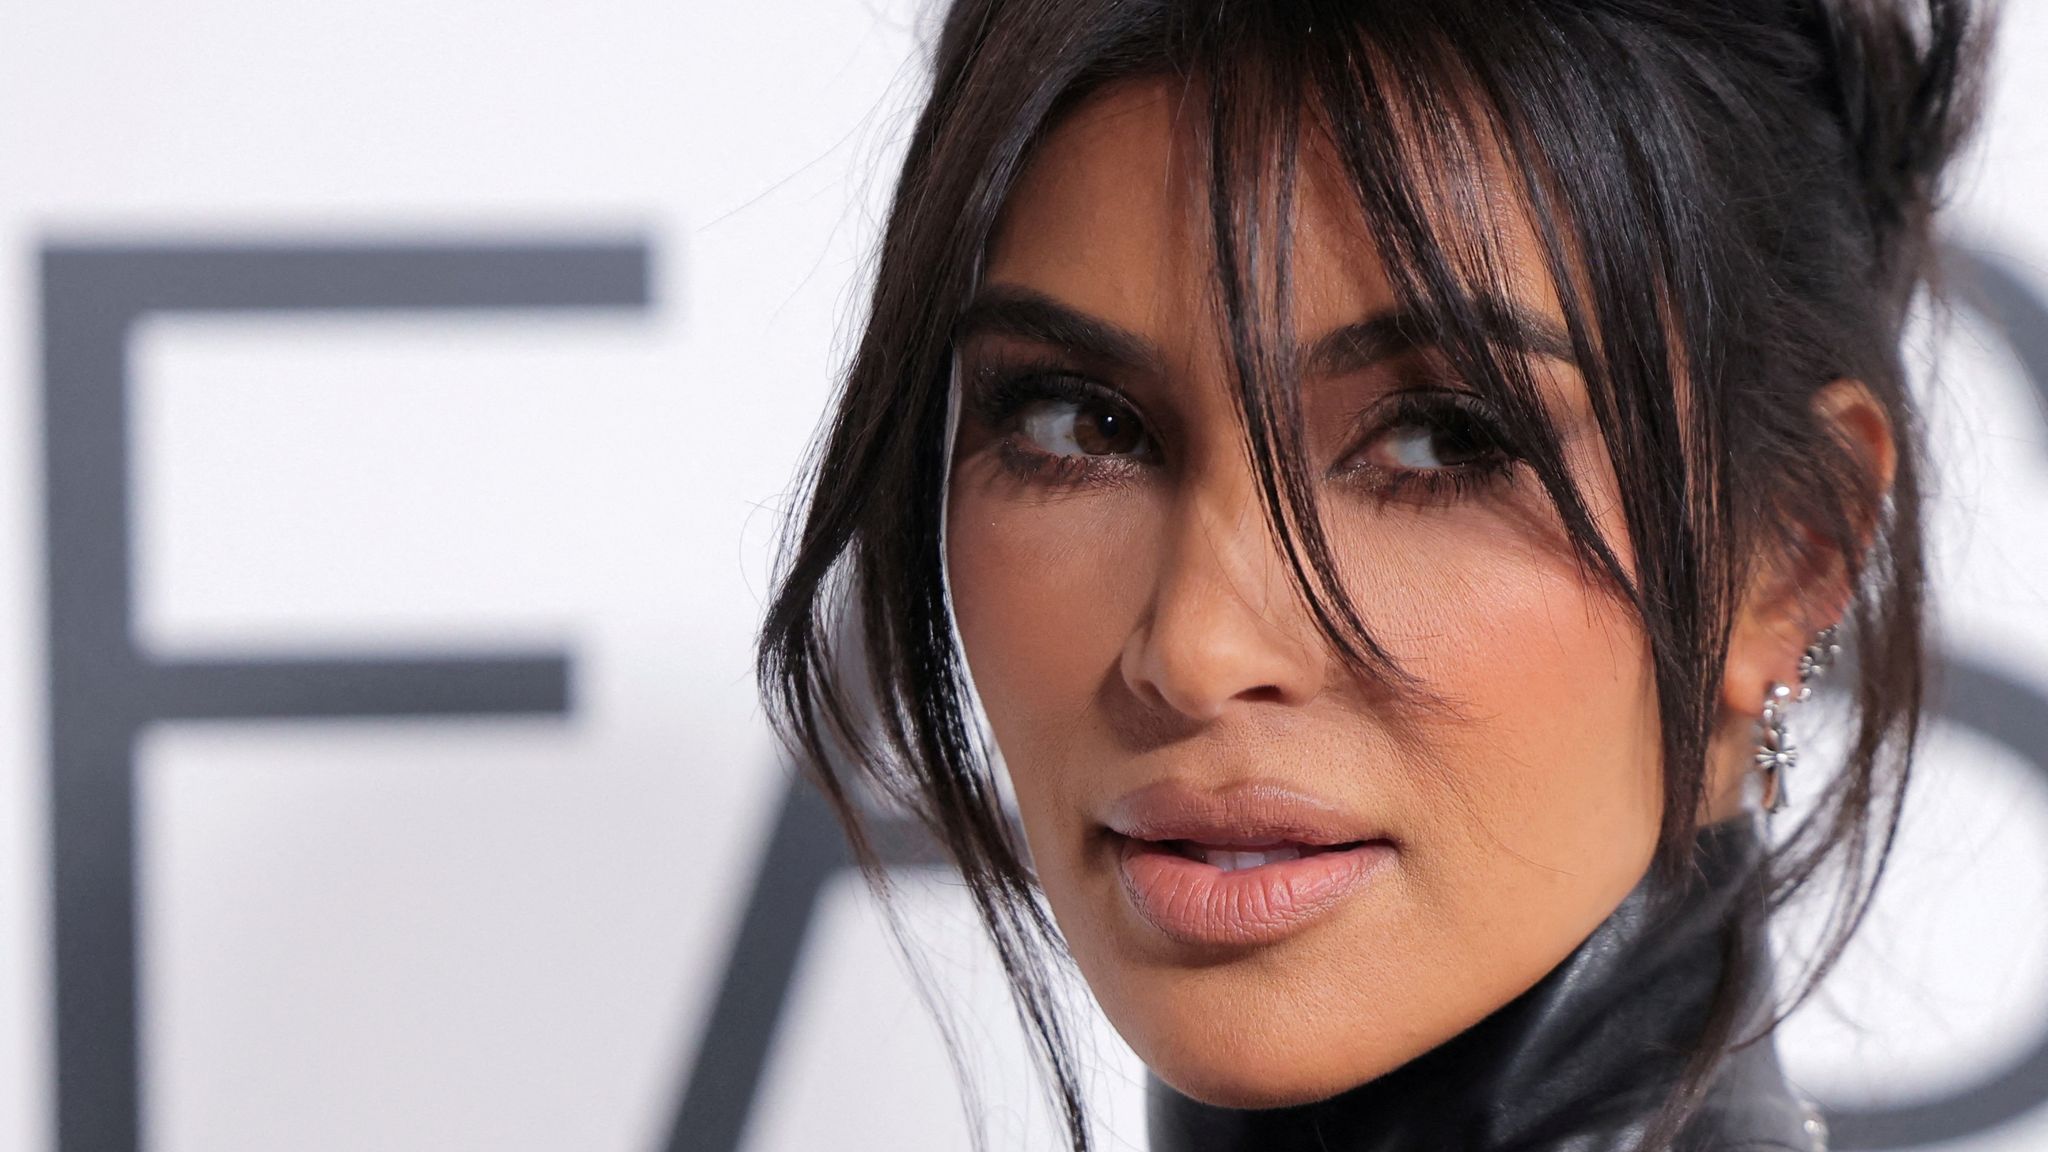 Kim Kardashian leaves tag on Balenciaga dress at Paris Fashion Show event |  Ents & Arts News | Sky News